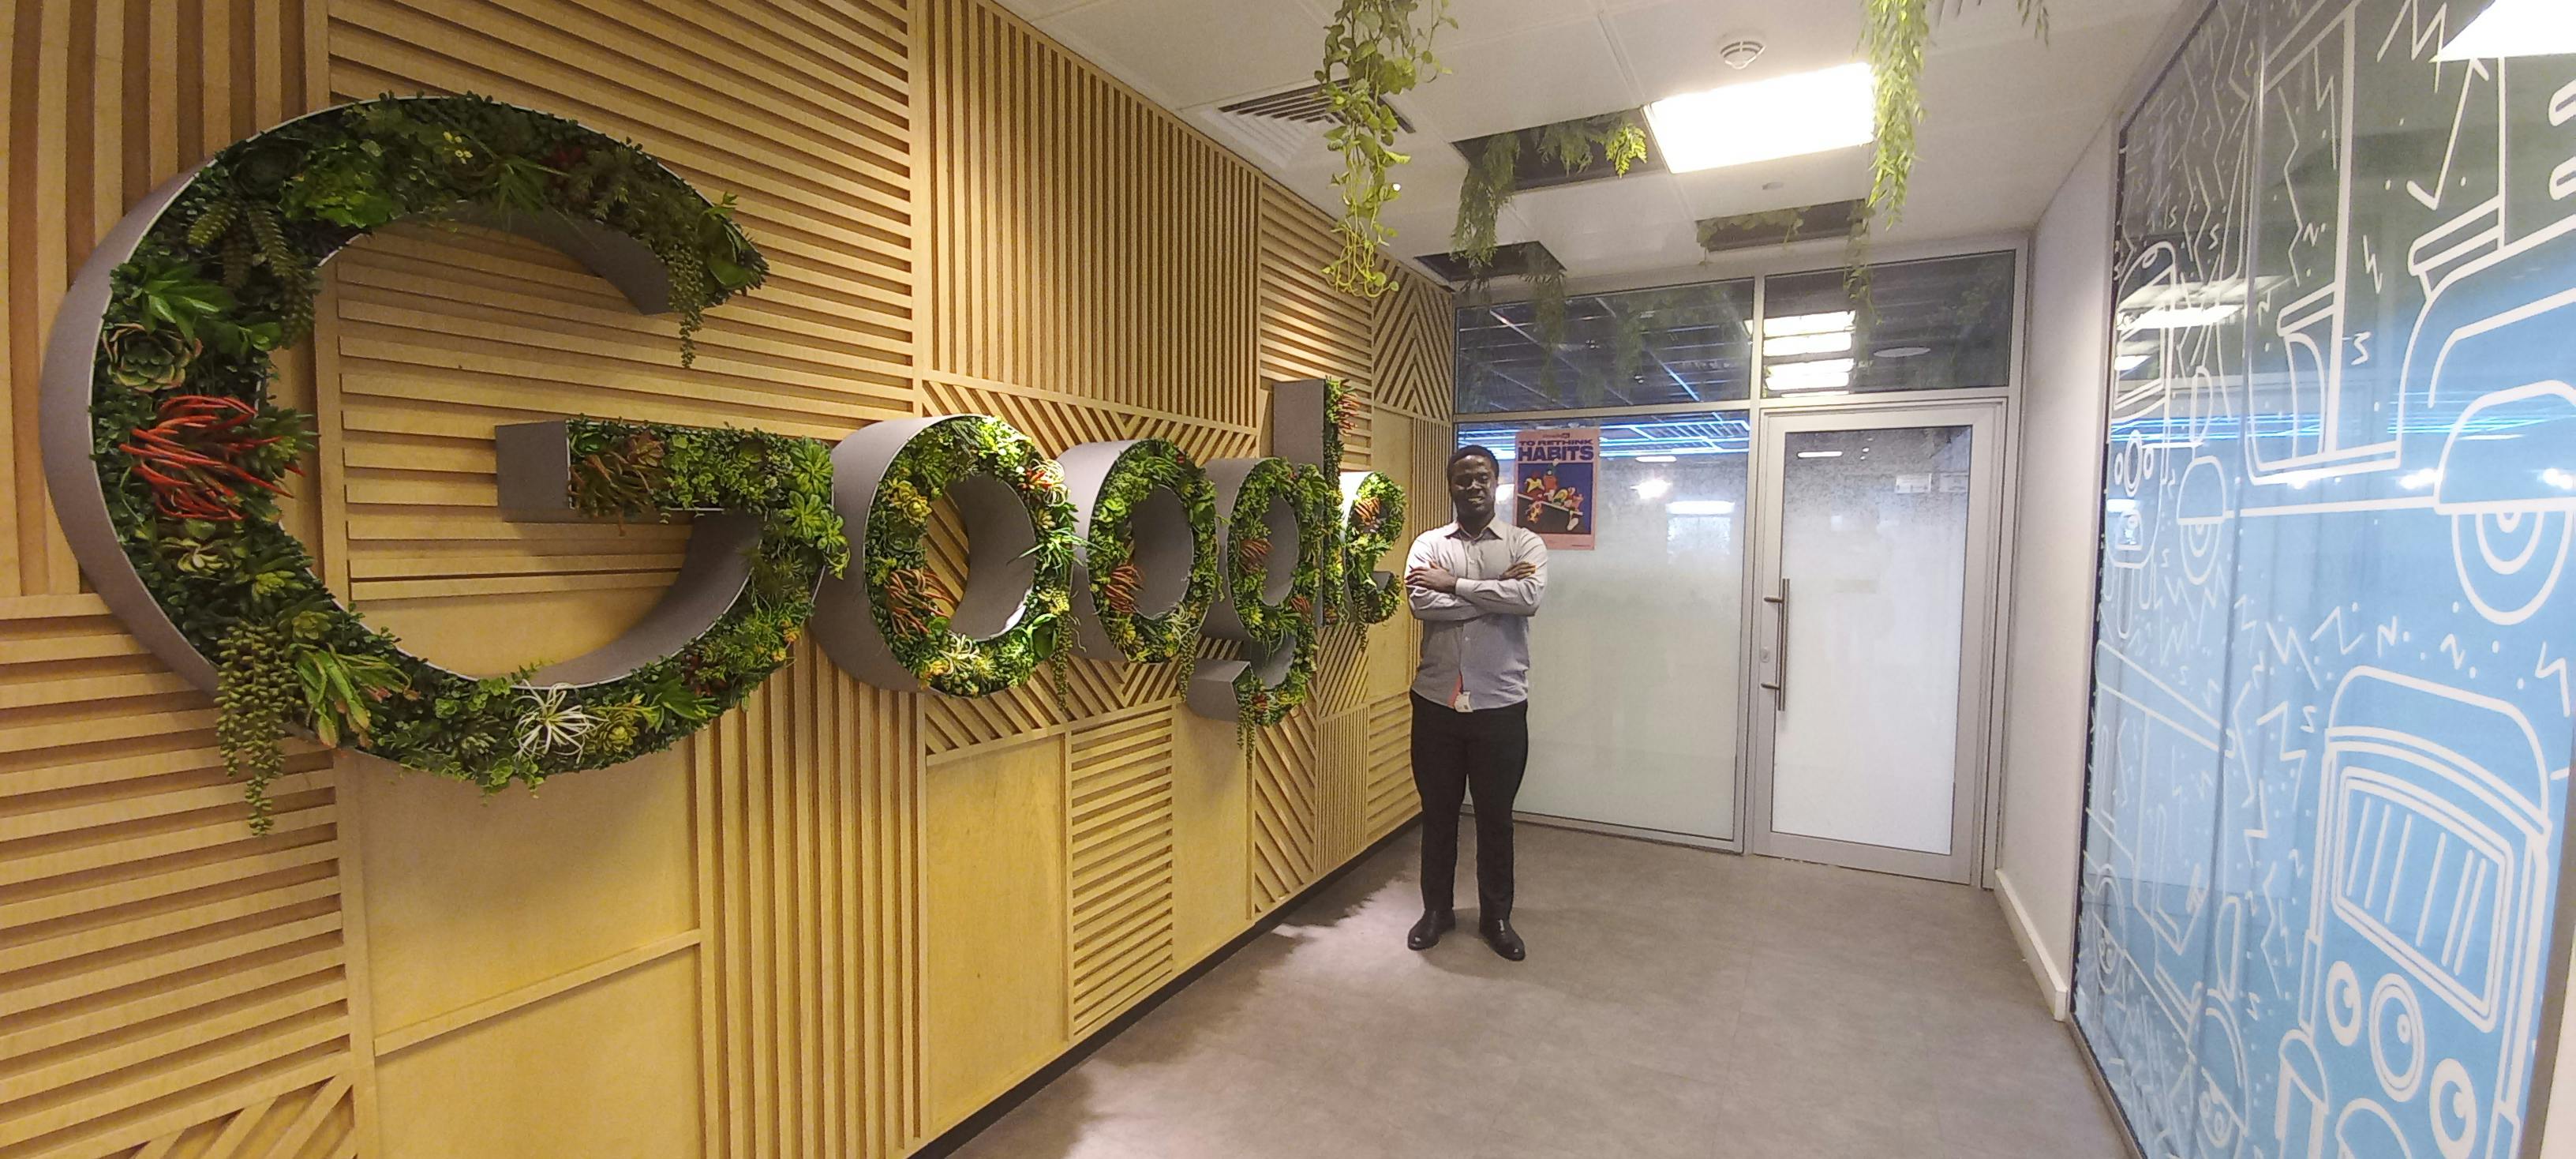 Visit to Google office, Lagos, Nigeria